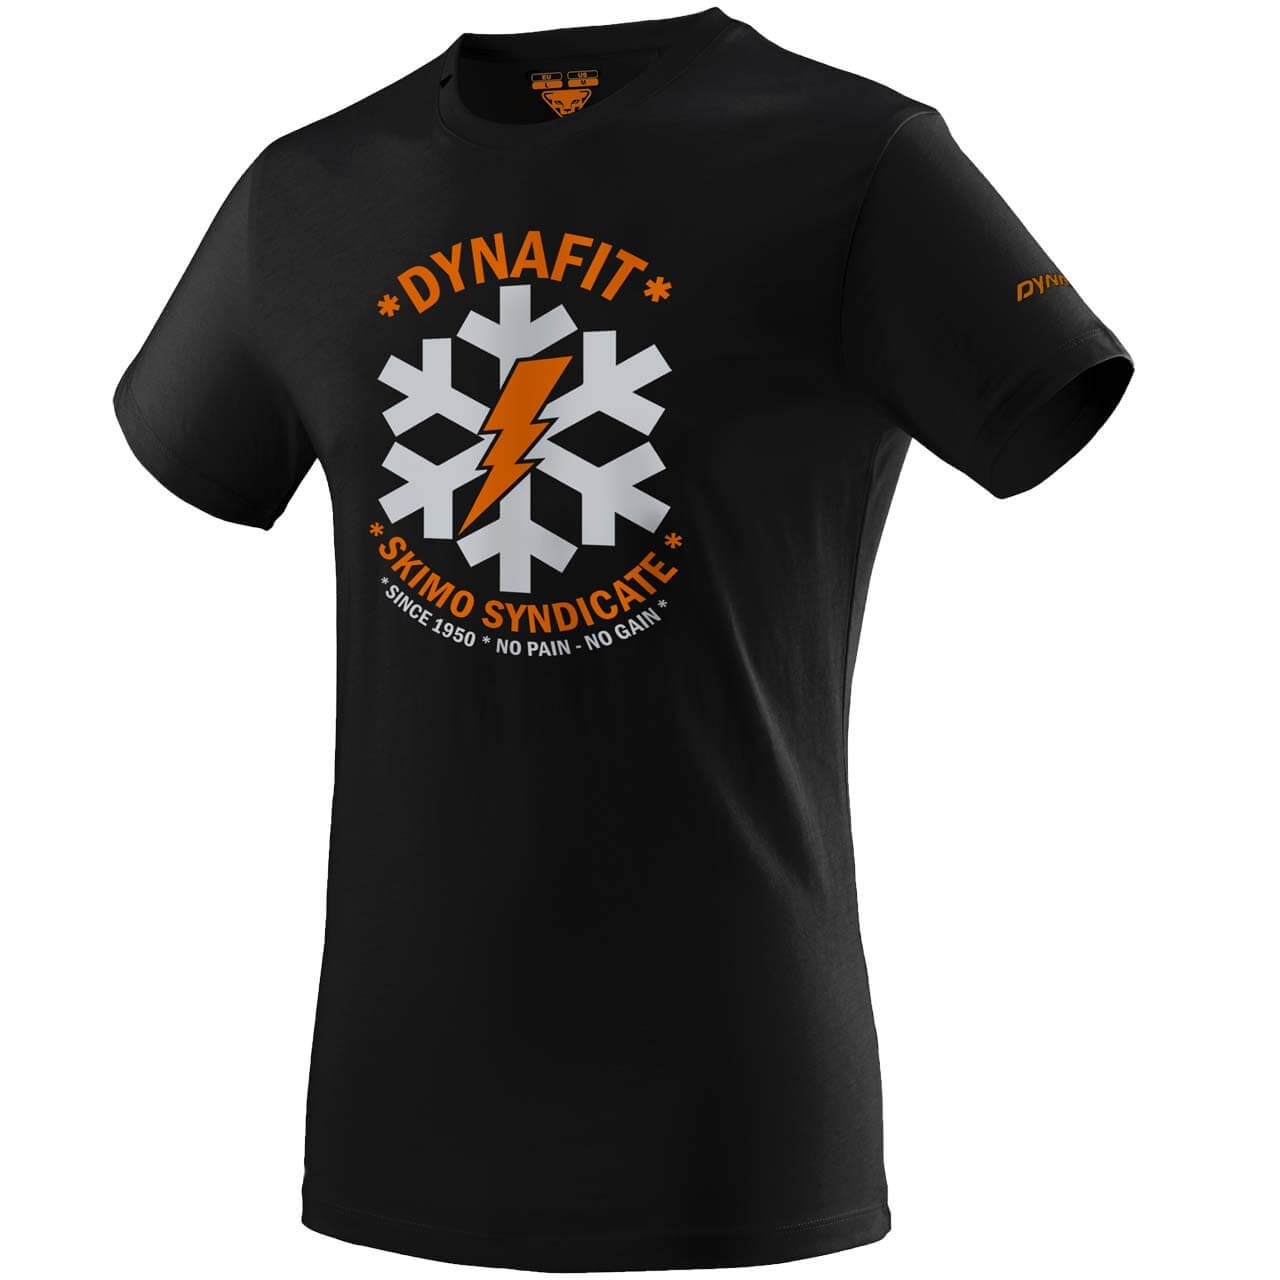 Dynafit Syndicate T-Shirt